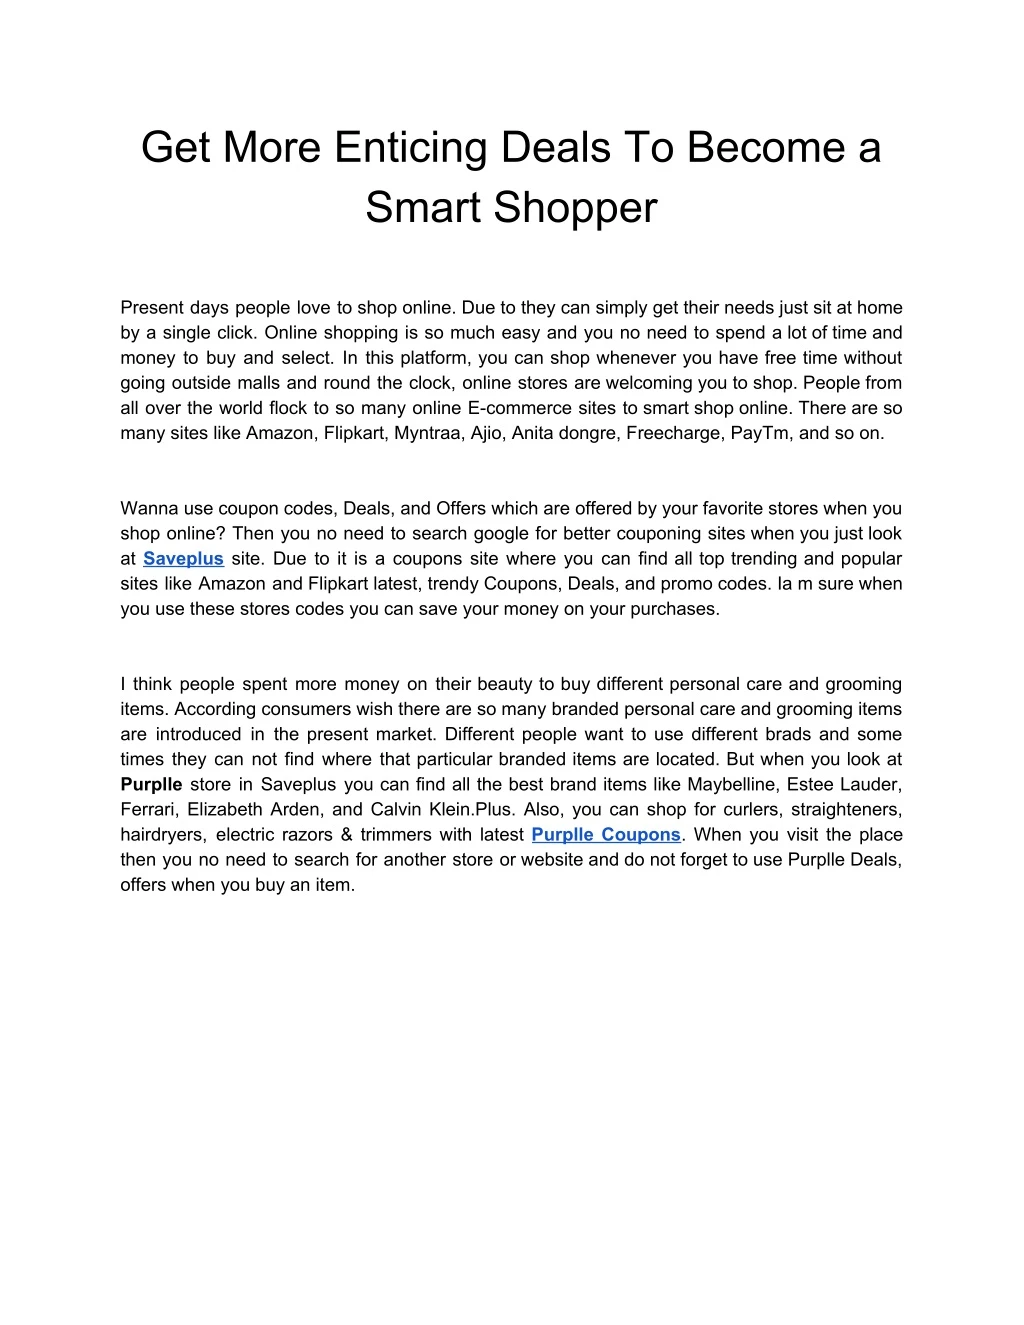 get more enticing deals to become a smart shopper